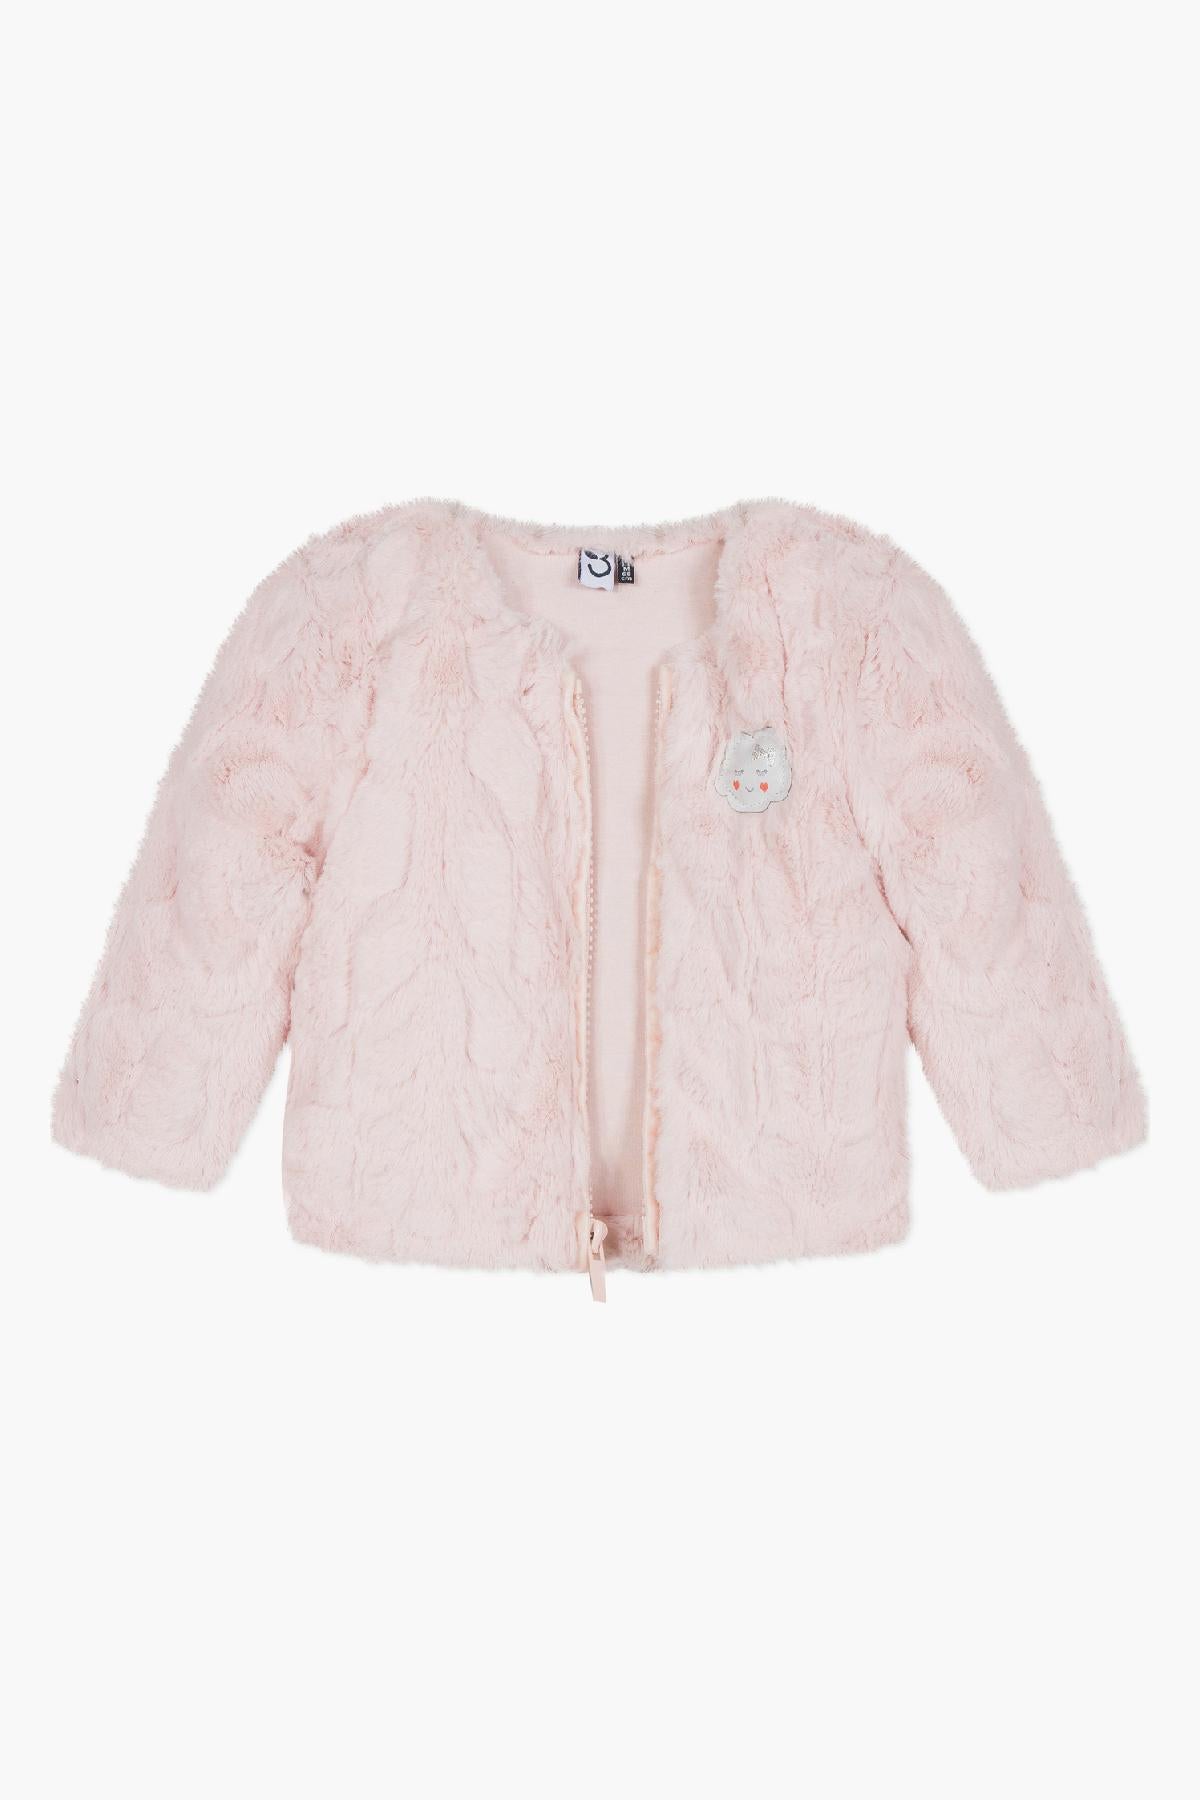 3pommes Pink Faux Fur Baby Girls Jacket (Size 12/18M left) – Mini Ruby